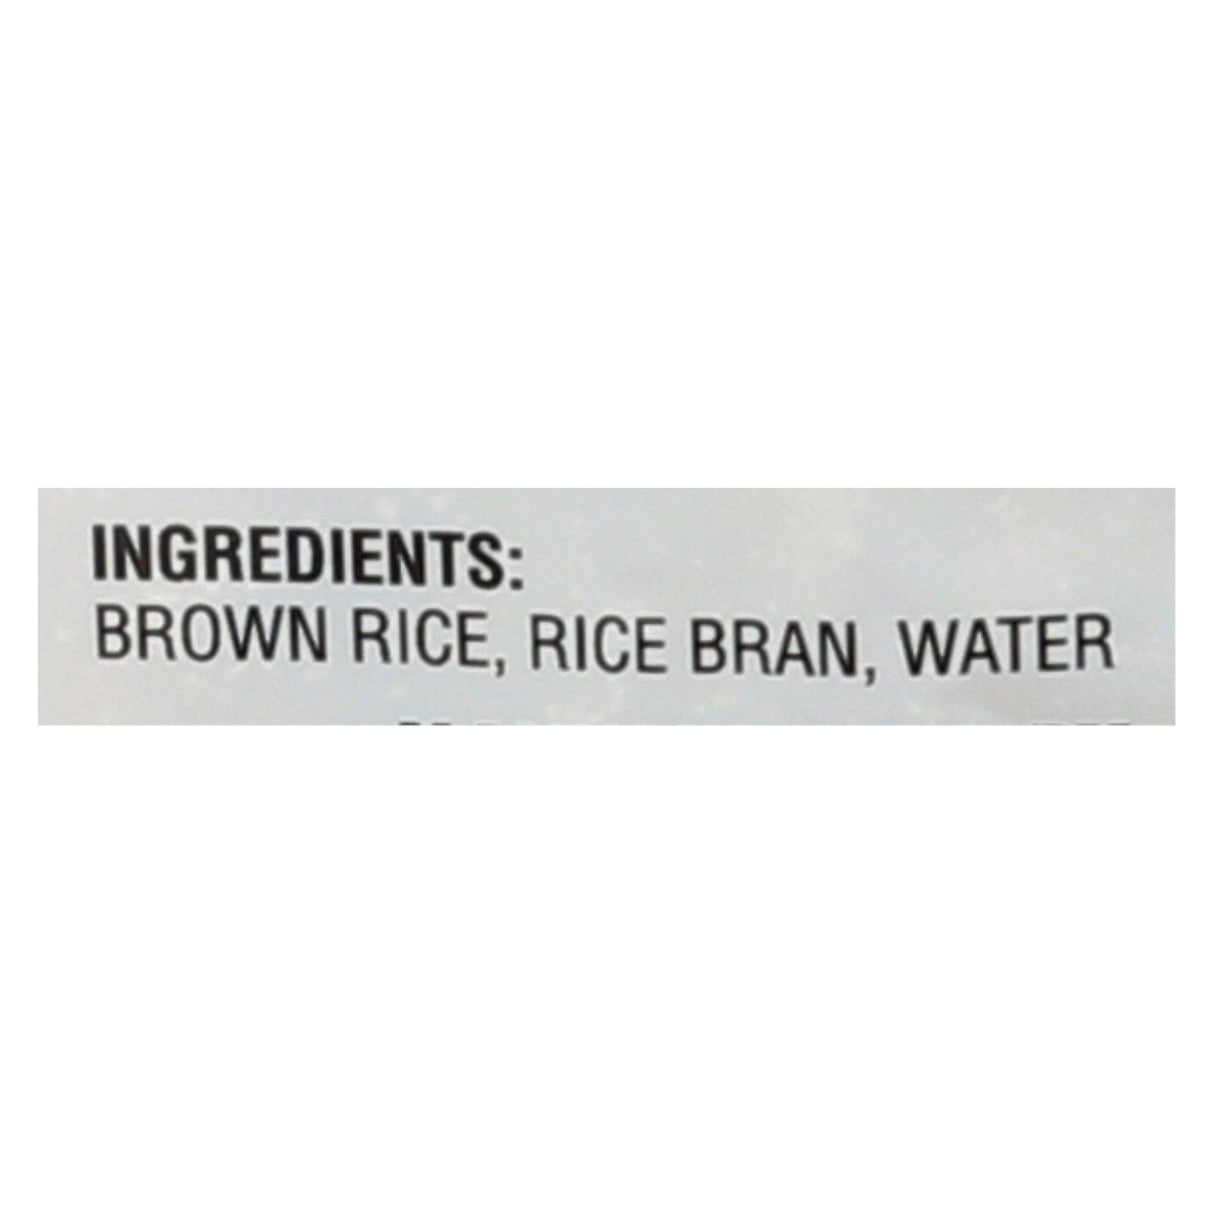 Tinkyada Gluten-Free Organic Brown Rice Spirals (12 Pack, 16 Oz. Each) - Cozy Farm 